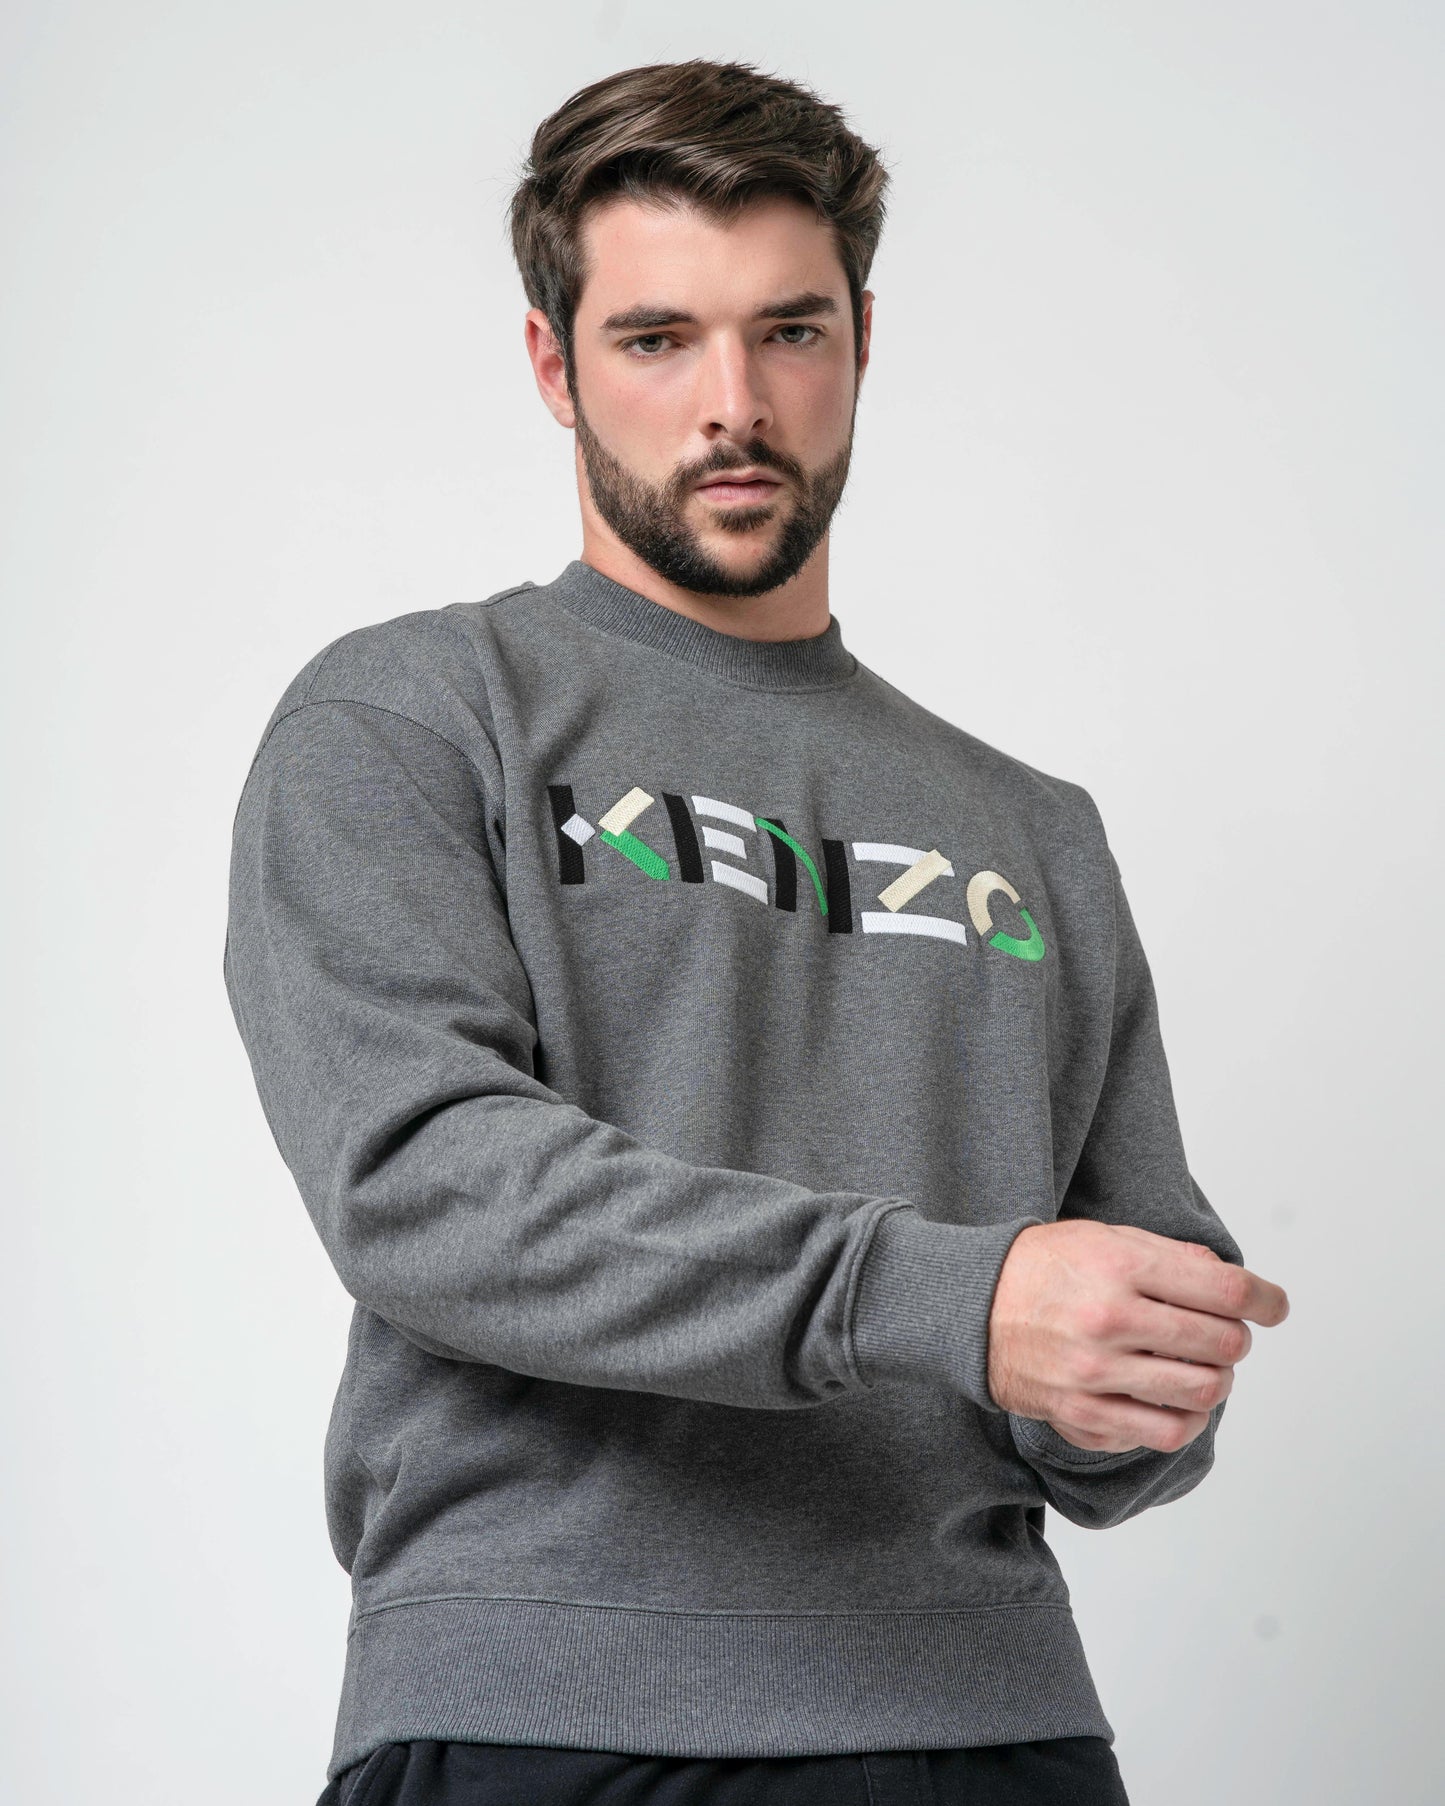 Kenzo Logo Multicolor Oversize Sweater